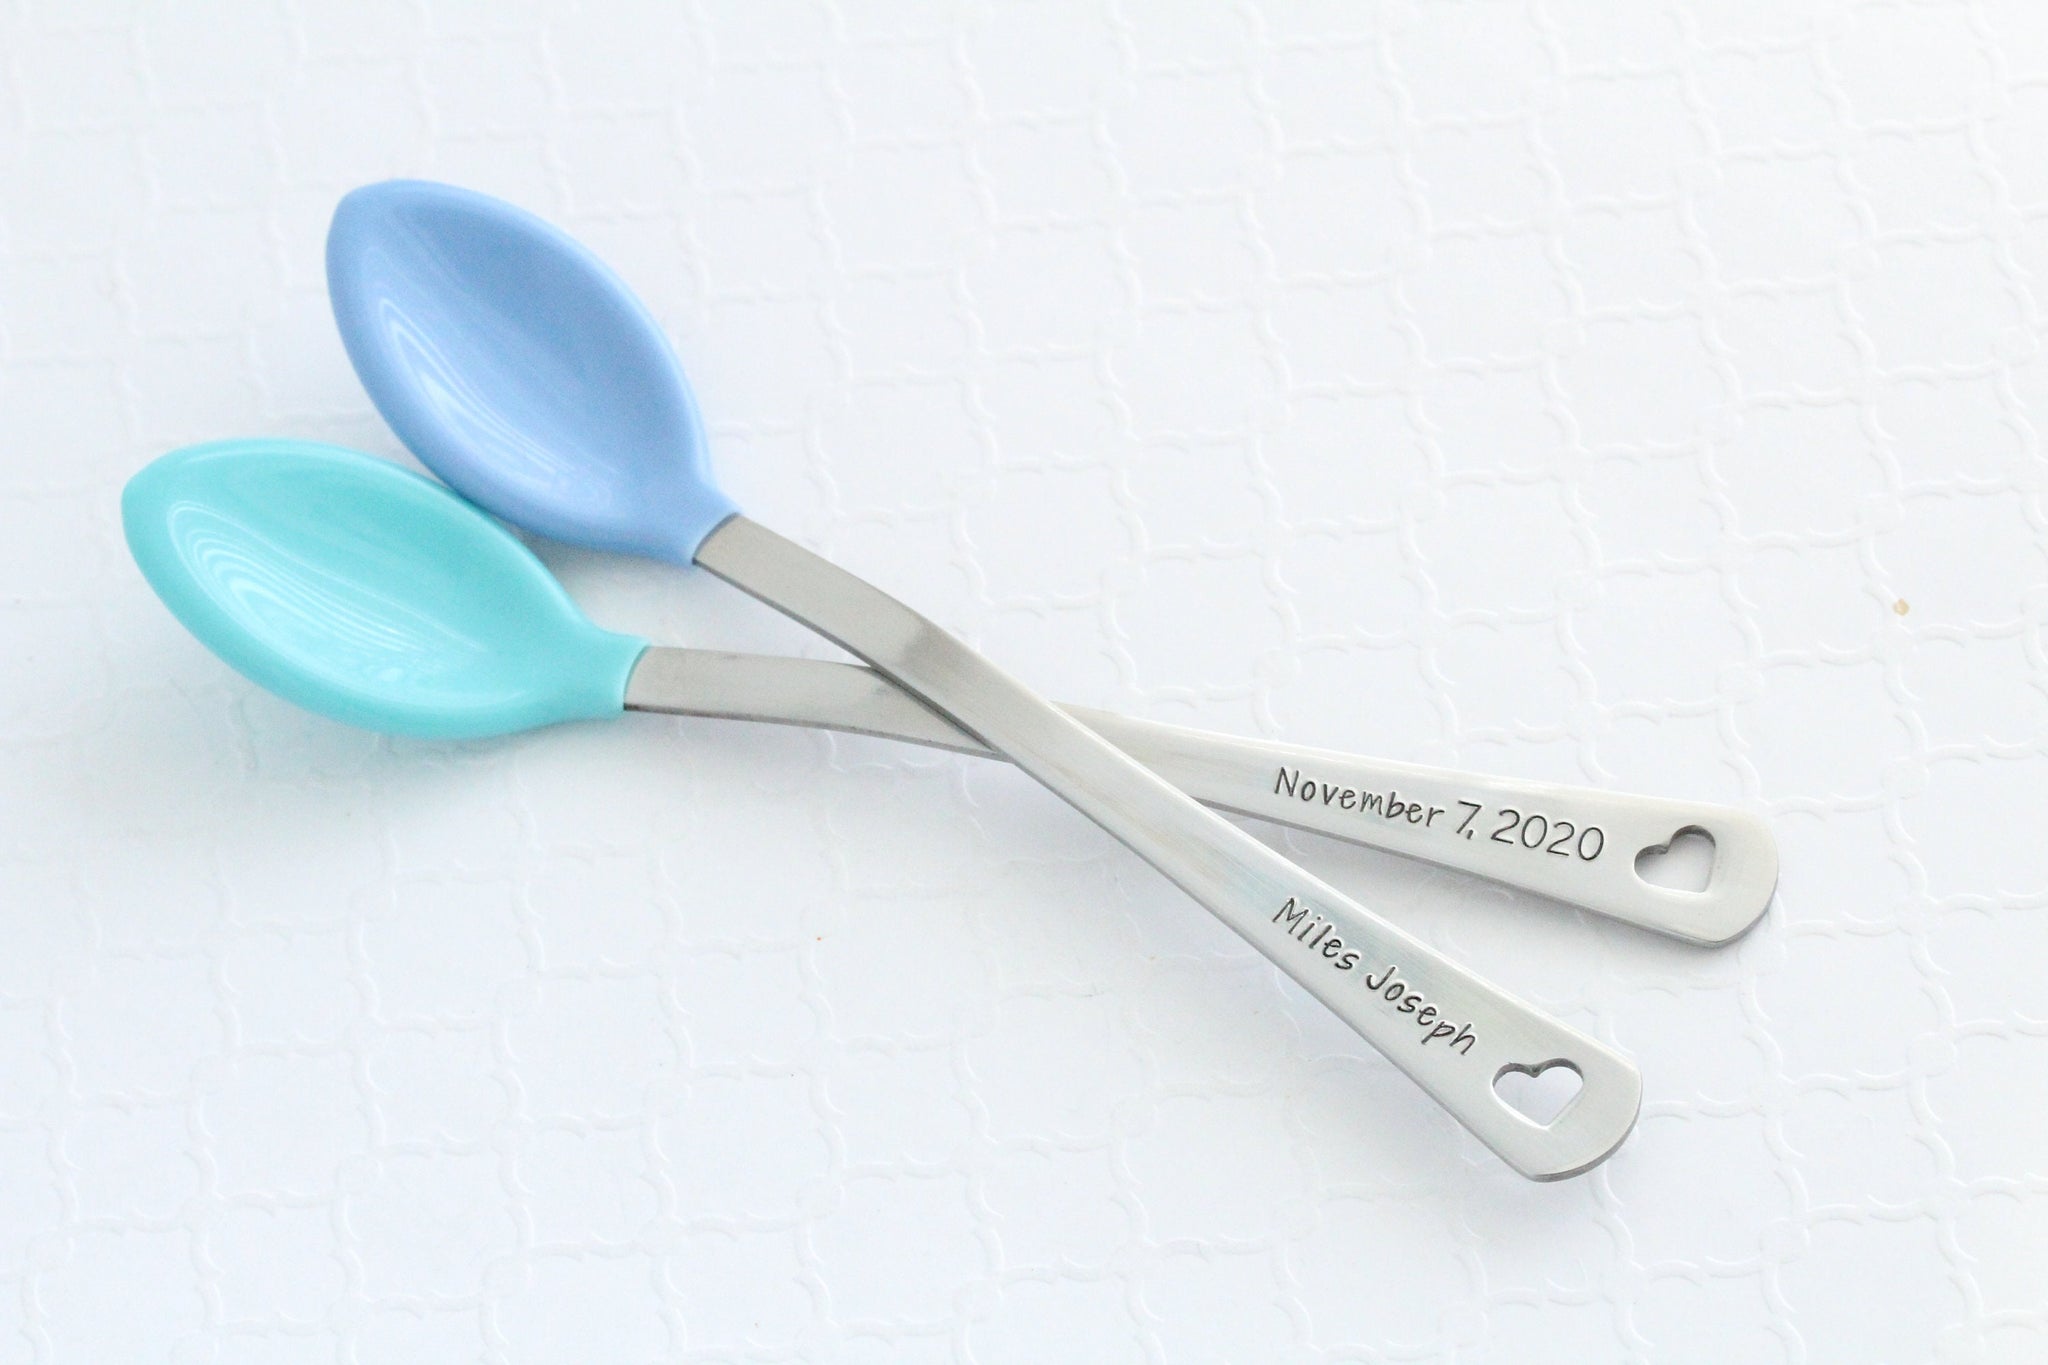 Personalized Munchkin Baby Spoon